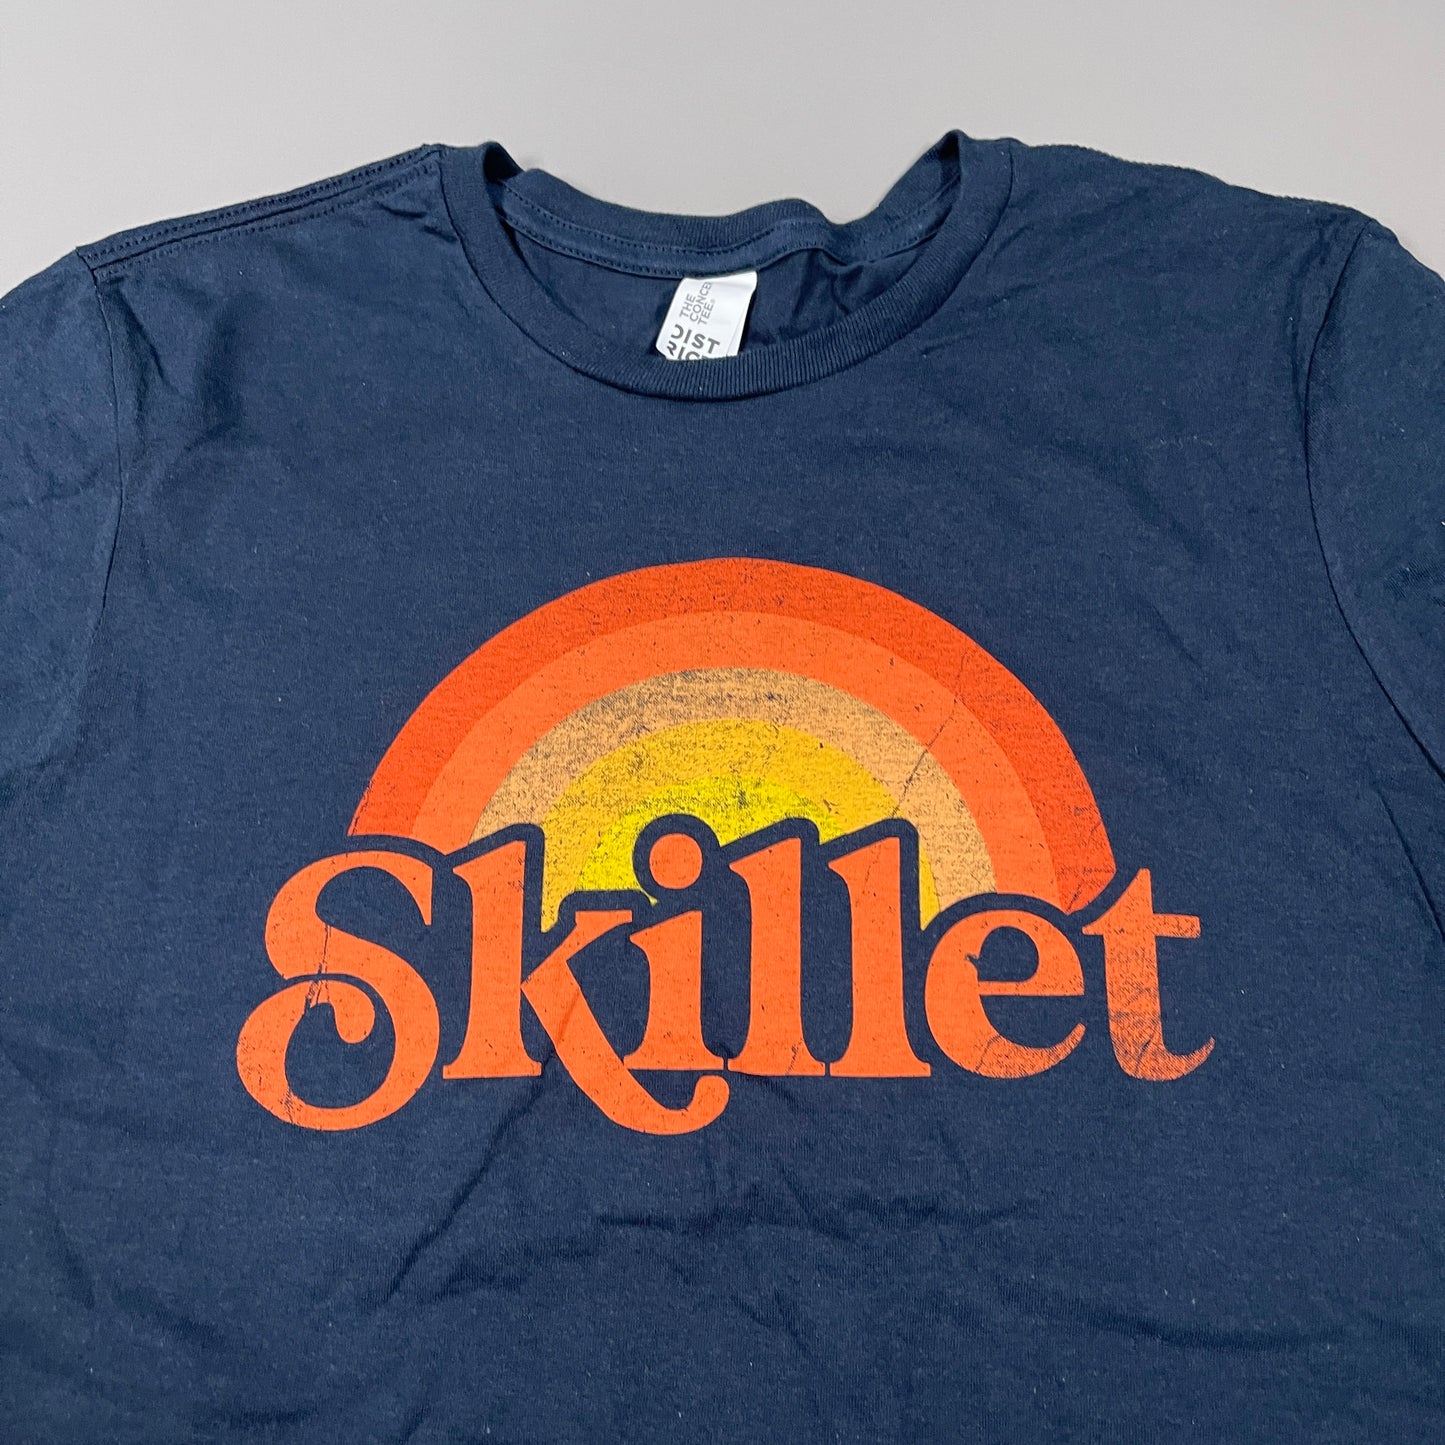 SKILLET Band Tee Shirt T-Shirt Youth Sz XL Blue/Orange (New)